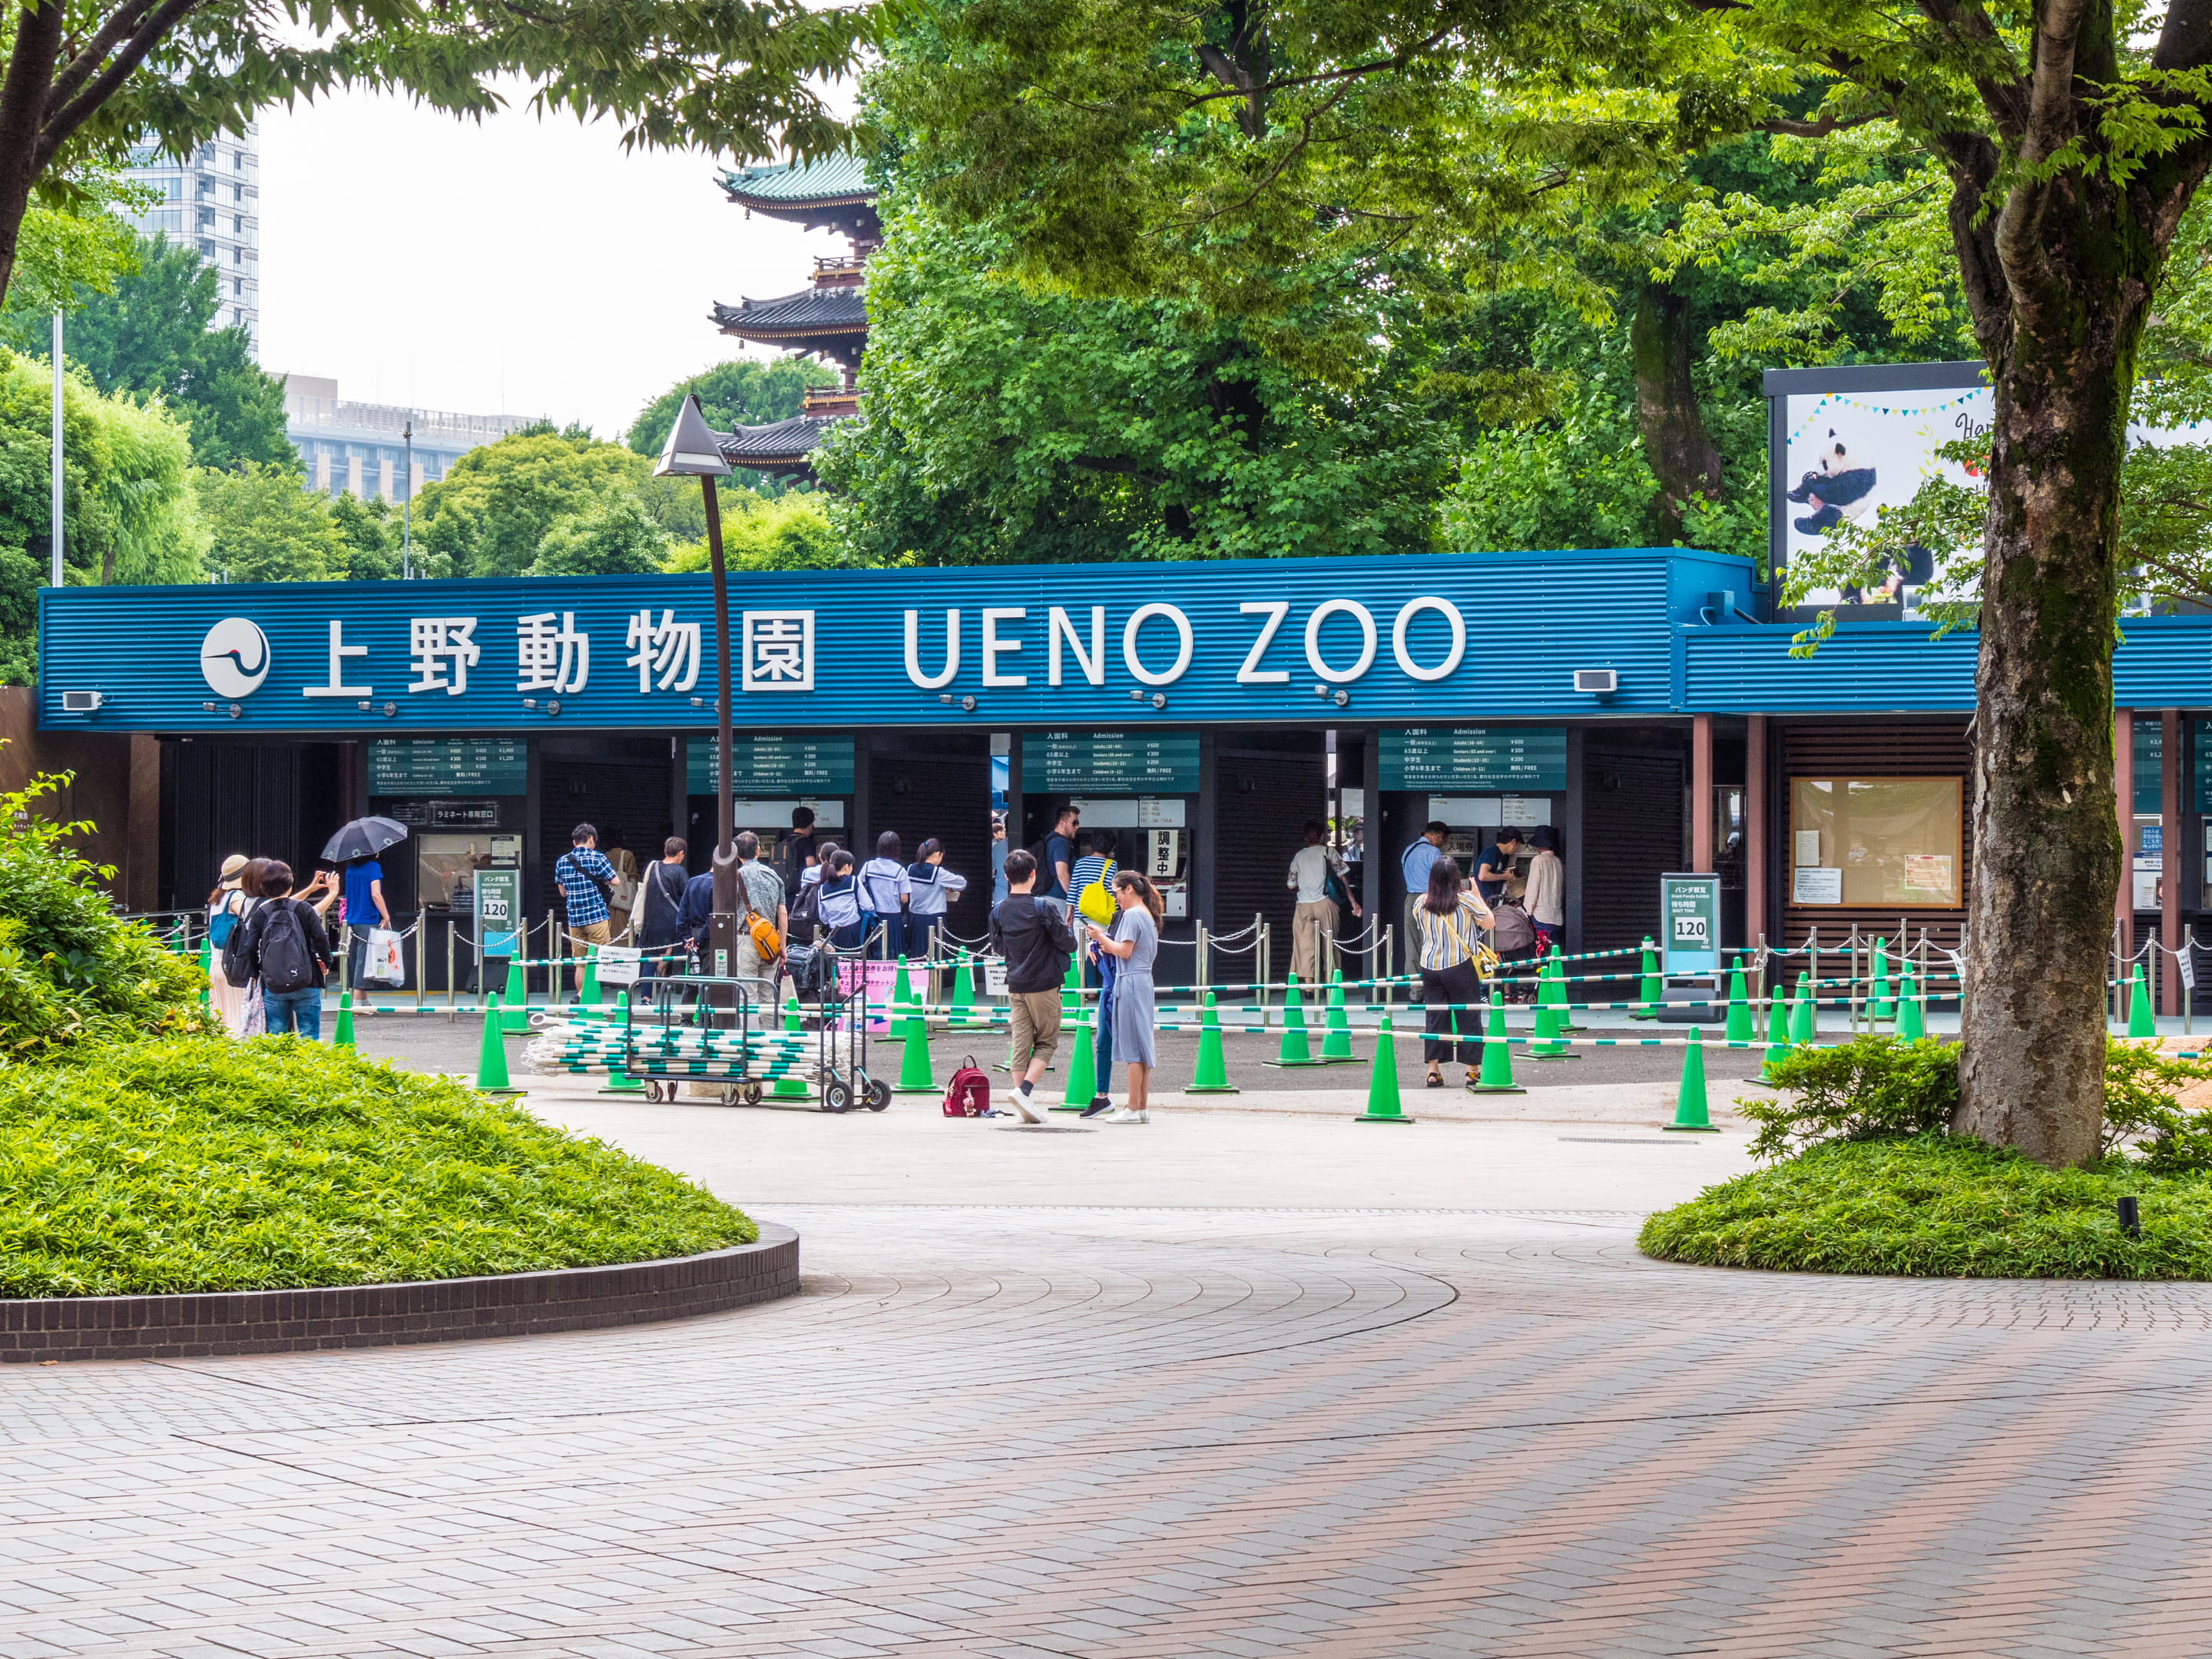 Ueno Zoo Overview